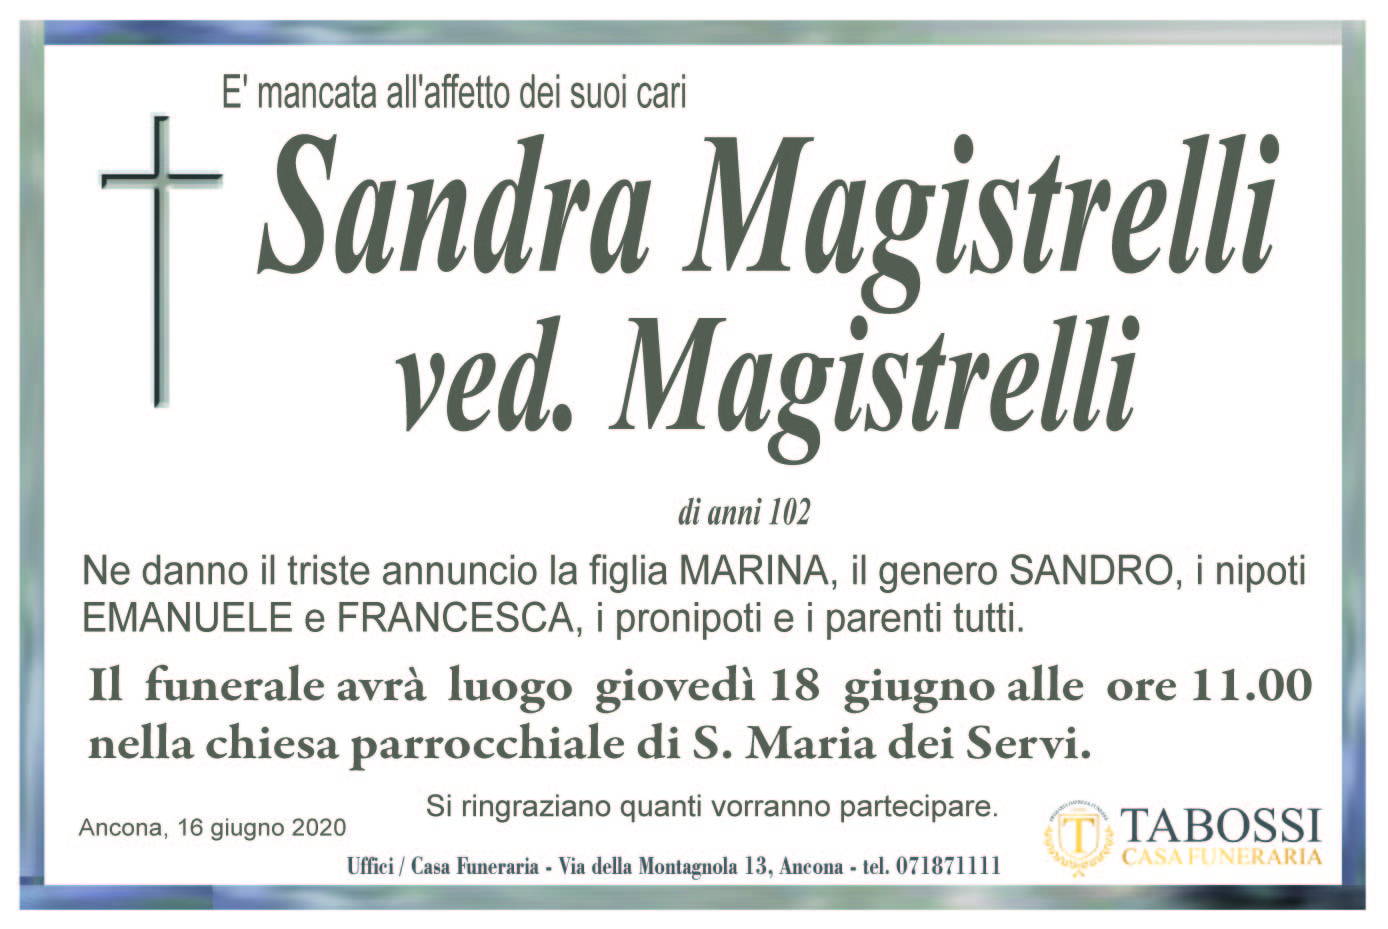 Sandra Magistrelli